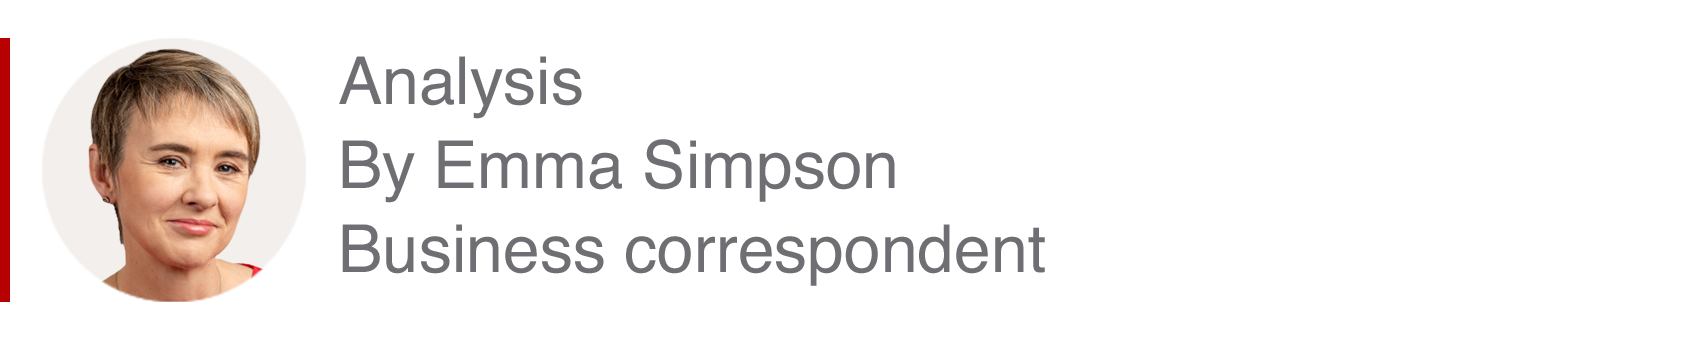 Analysis box by Emma Simpson, business correspondent